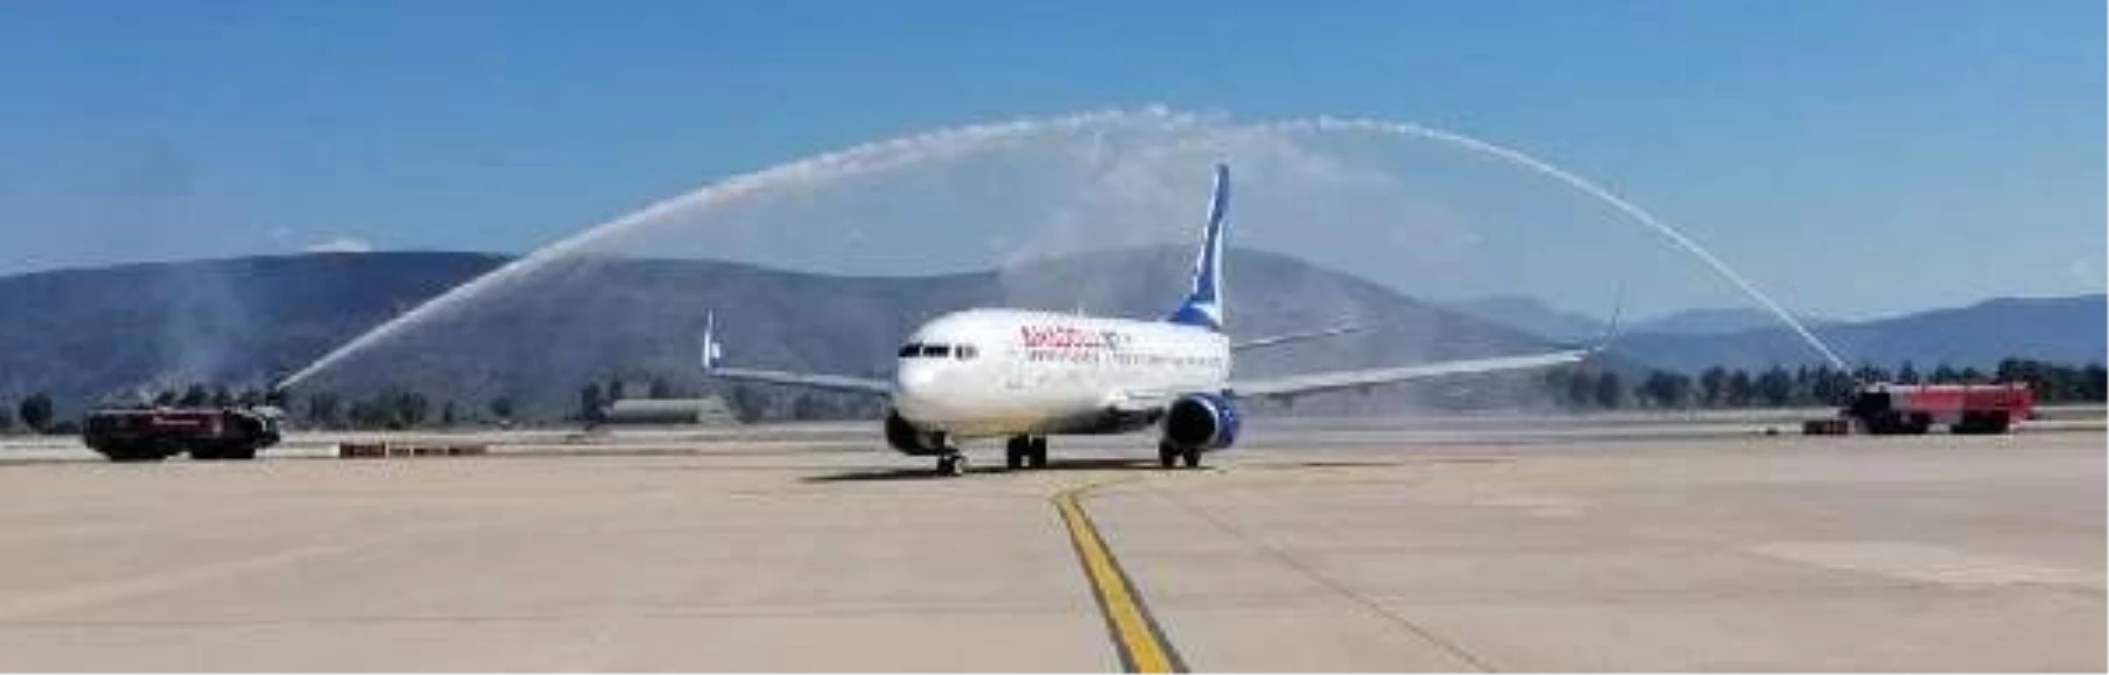 Milas-Bodrum Havalimanı\'na inen ilk uçağa su takıyla karşılama